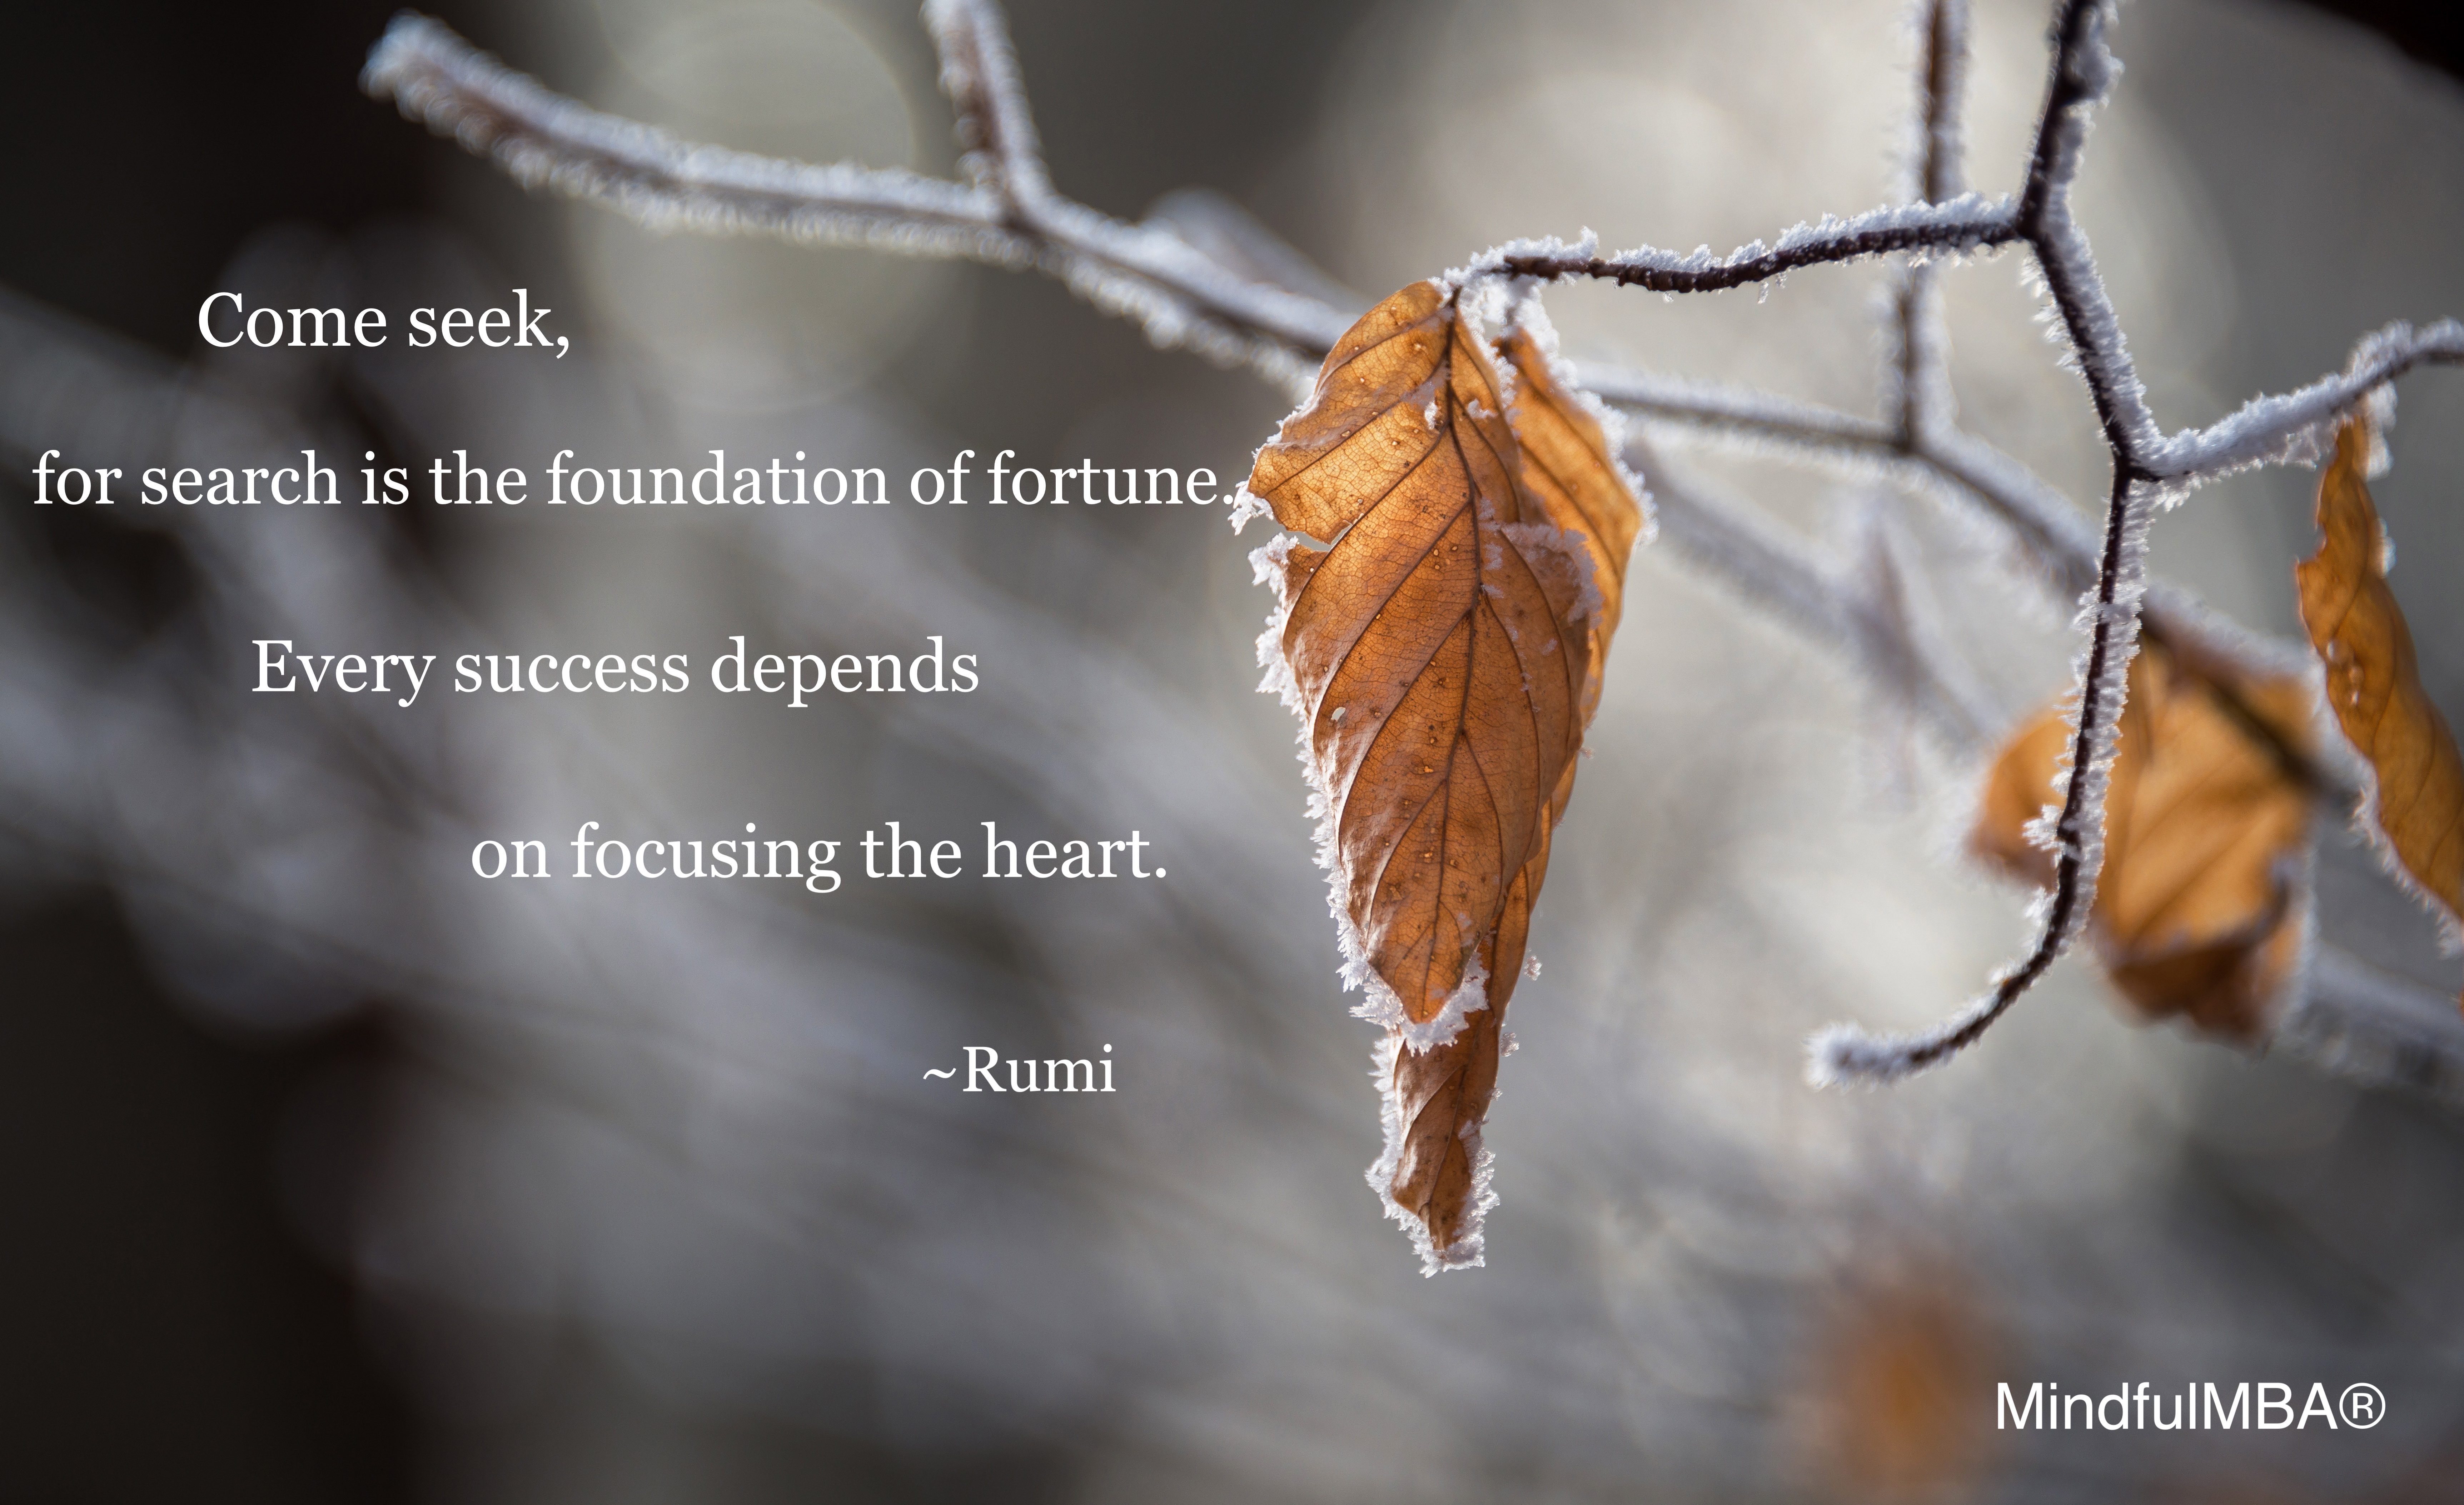 Rumi_Come seek fortune quote w tag